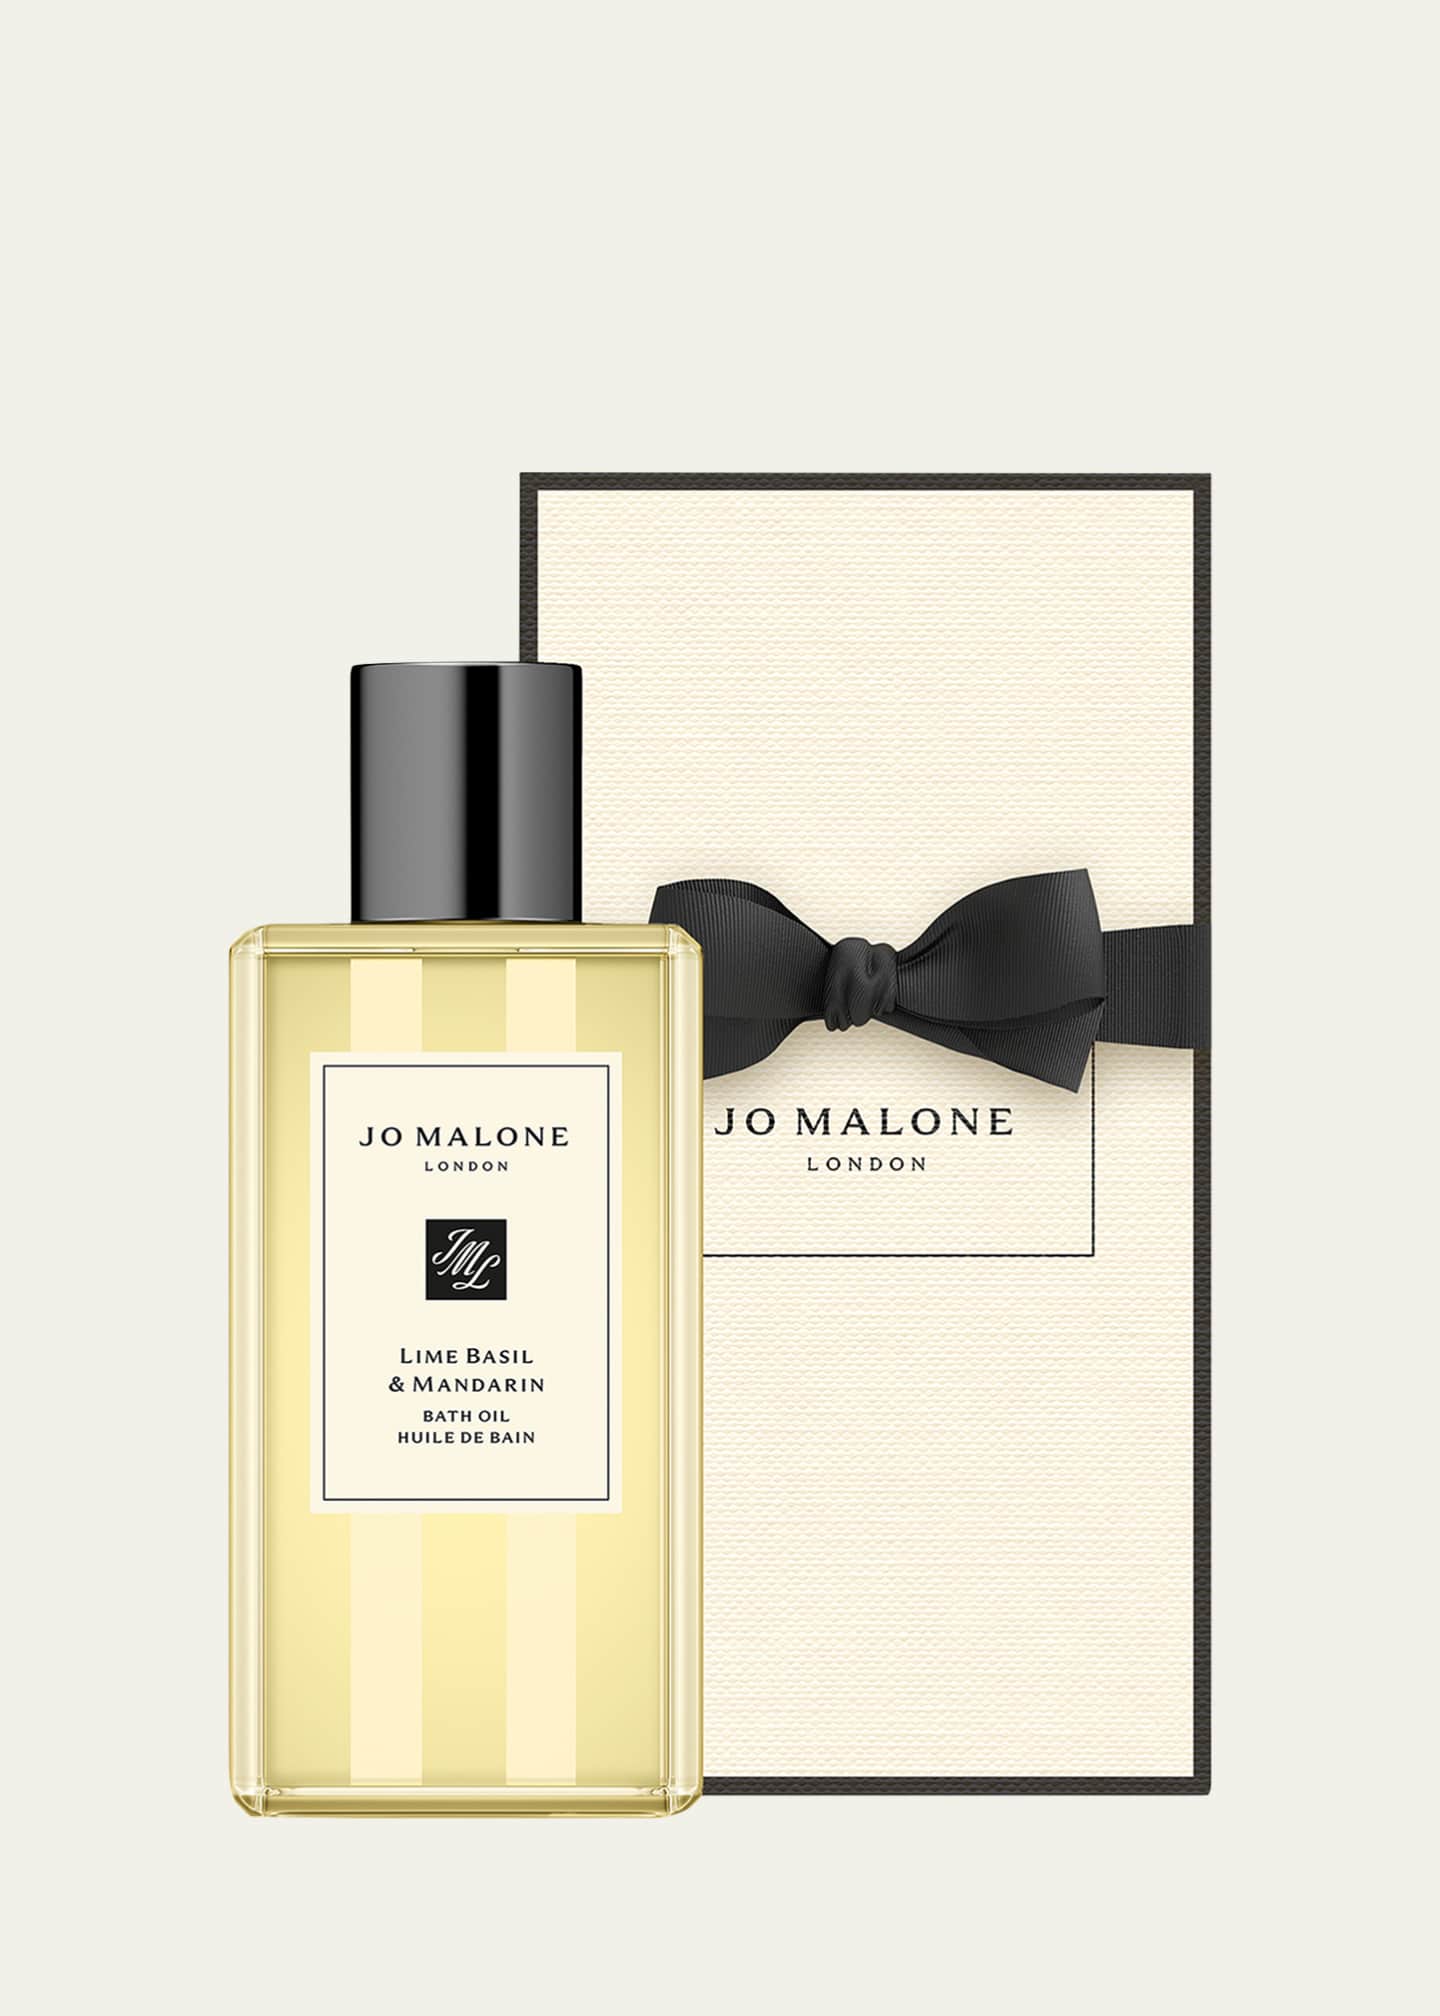 Jo Malone London 8.5 oz. Lime Basil & Mandarin Bath Oil Image 1 of 3